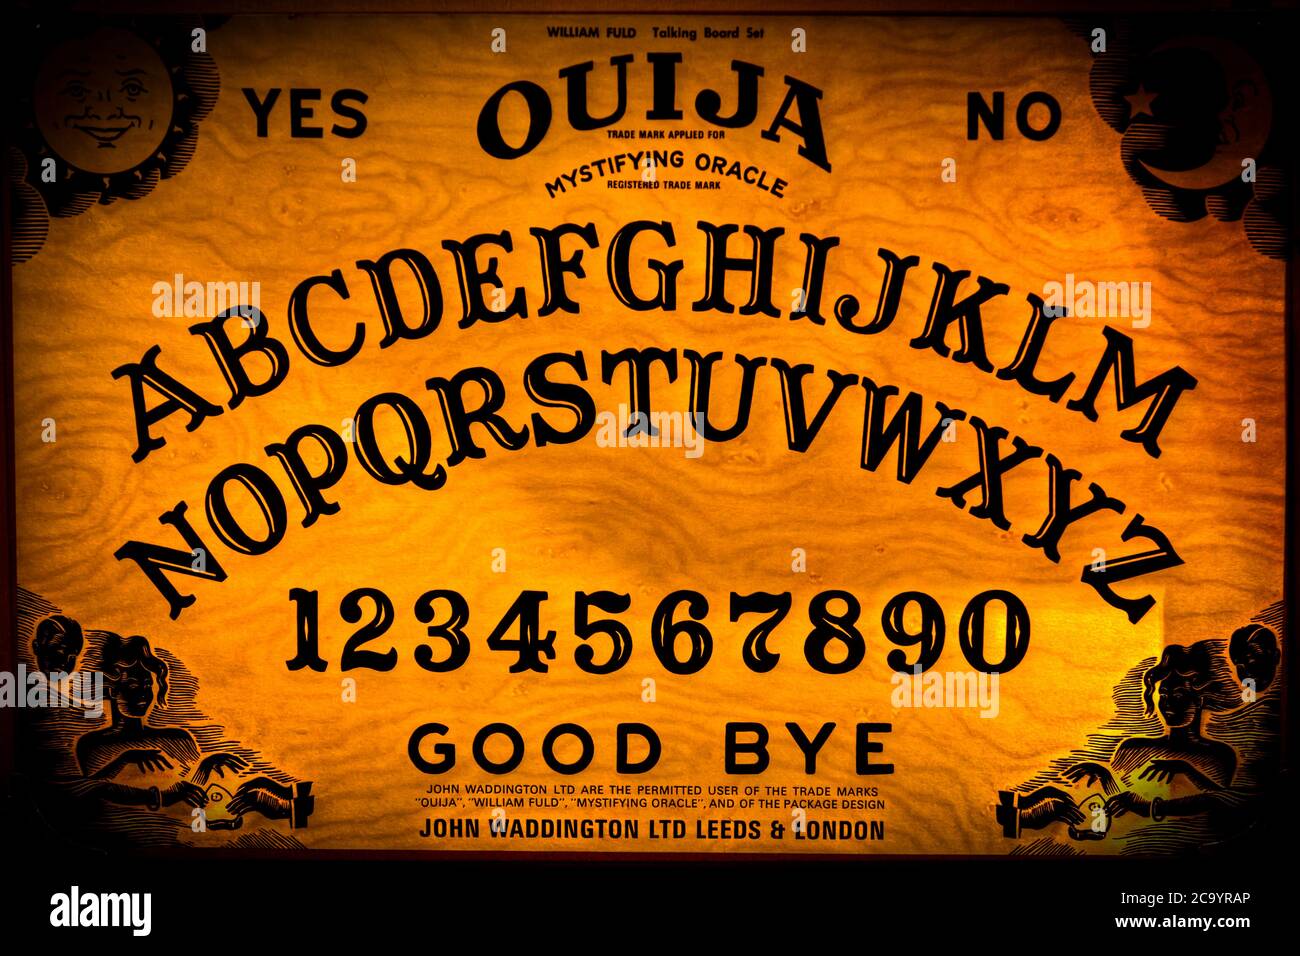 Ouija board, ouija, board, boards, ouija boards, Ouija alphabet, ouija board numbers, ouija, seance, dead, summon, spirit board, talking board, Stock Photo